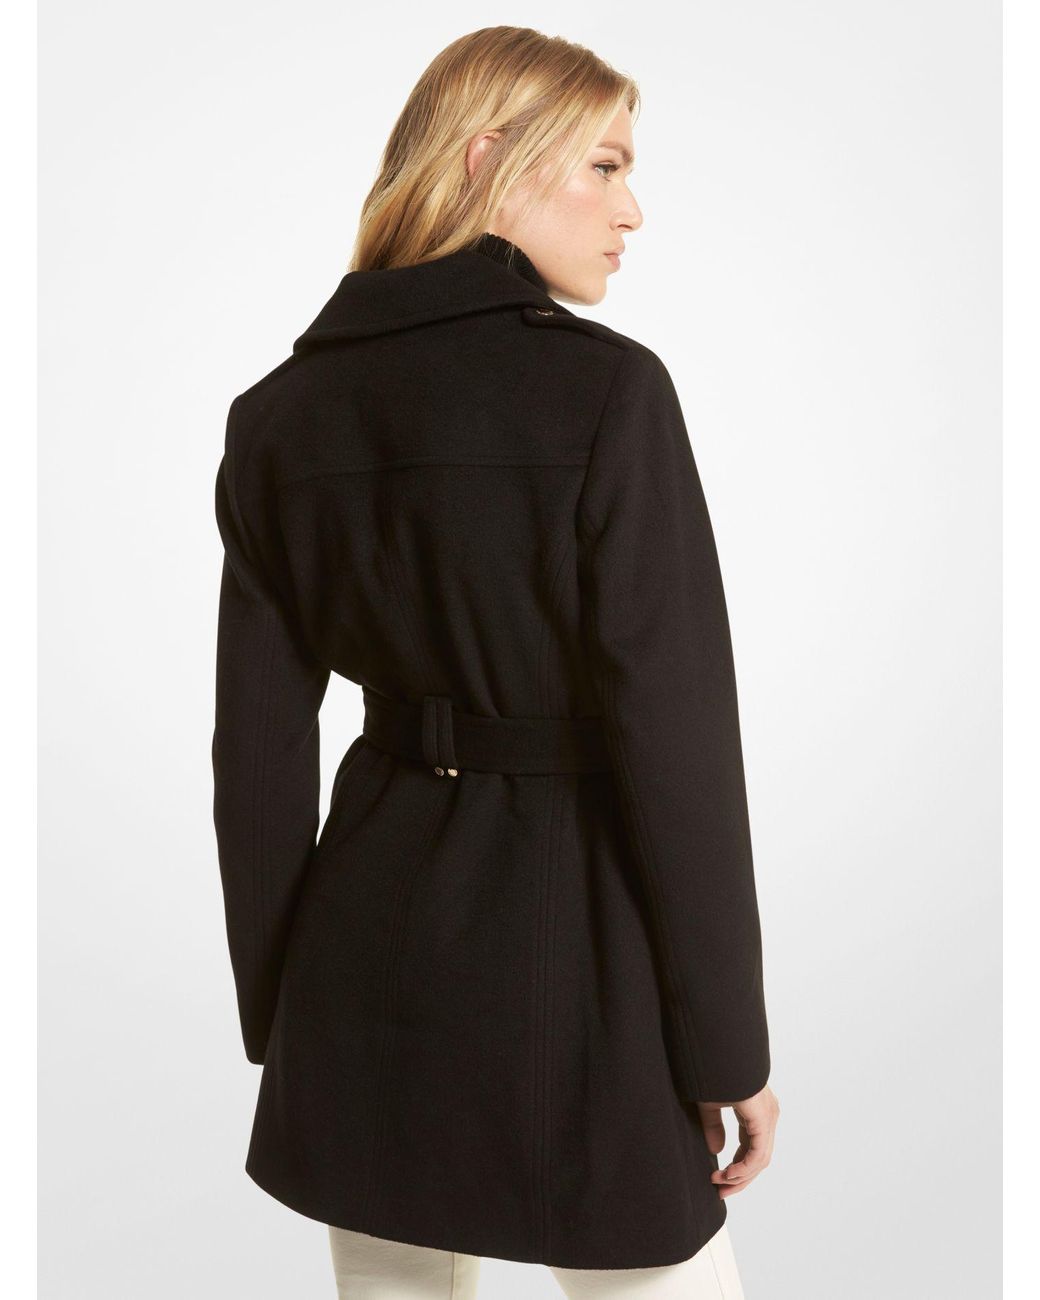 Michael Kors Wool Blend Belted Coat in Black | Lyst